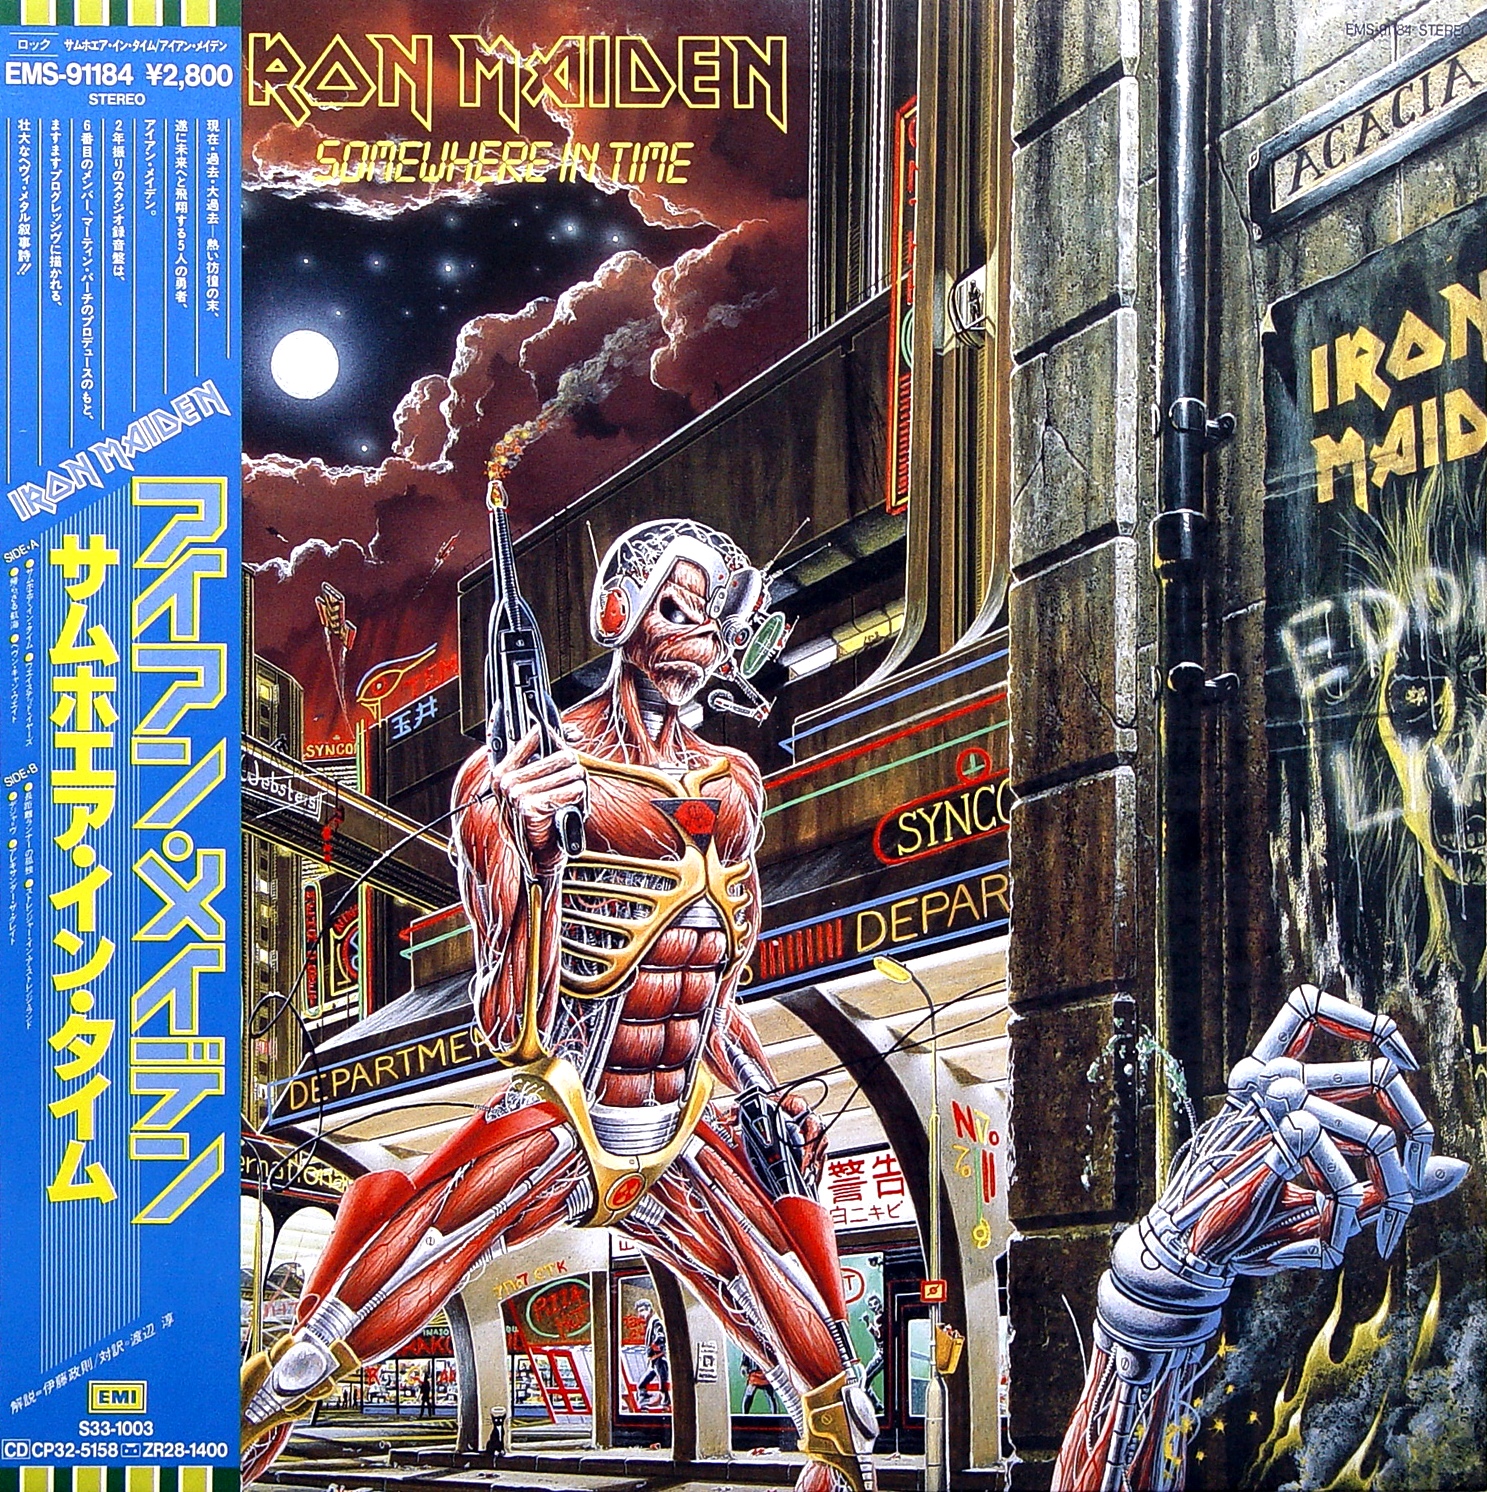 1986 Somewhere In Time - Iron Maiden - Rockronología